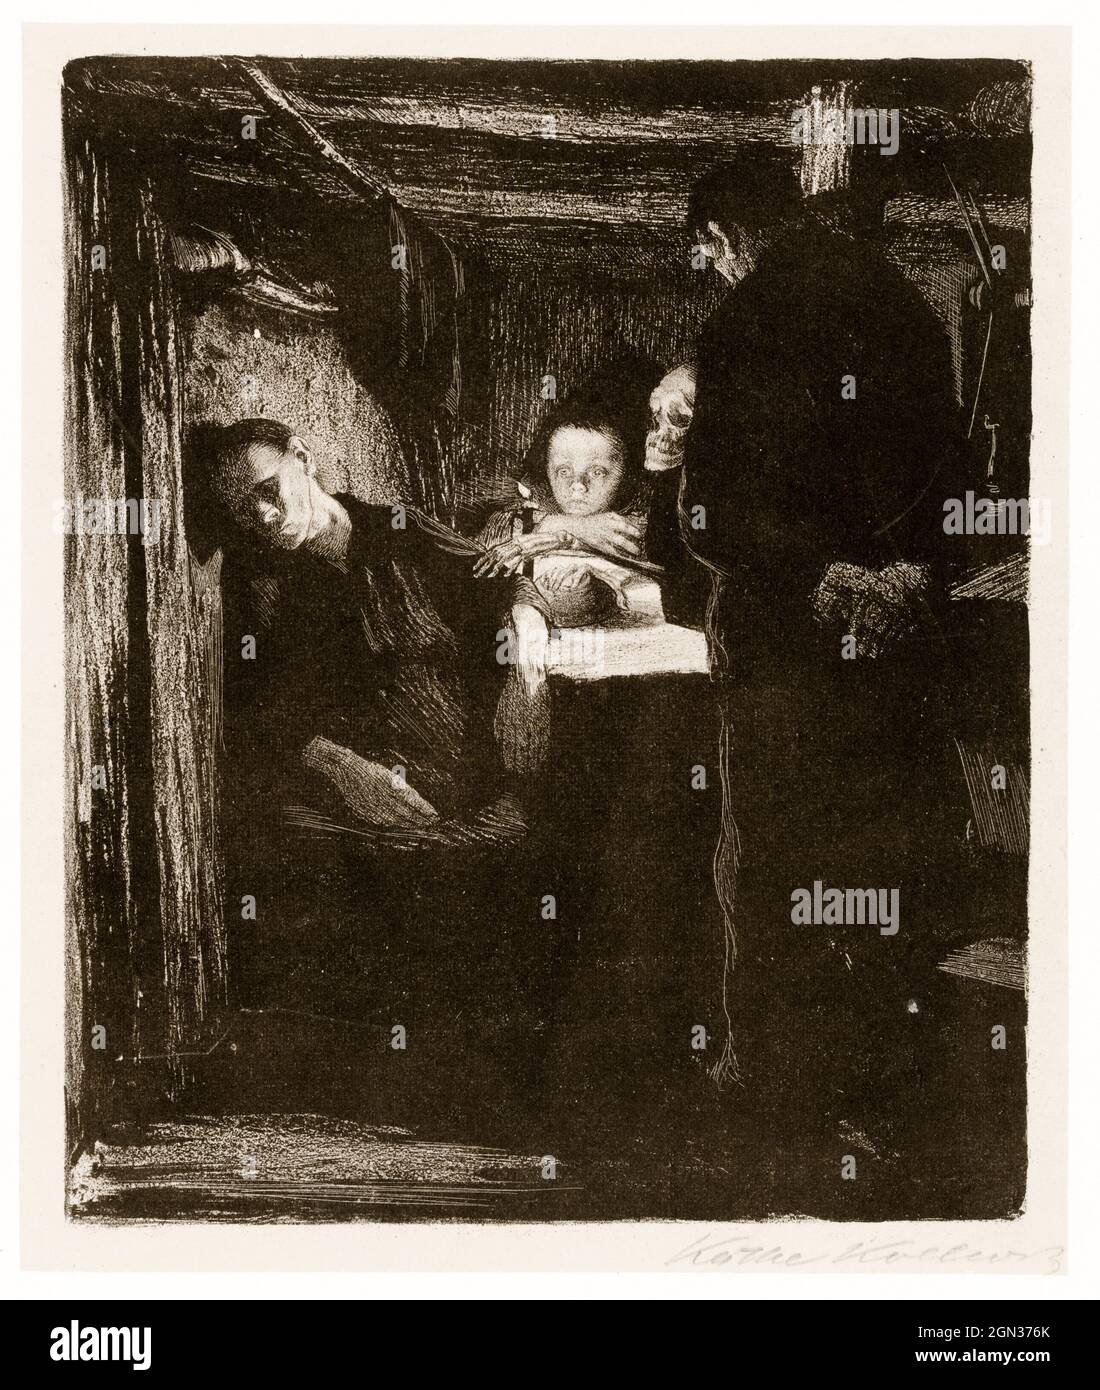 Käthe Kollwitz, Tod (Death), lithographic print, 1893-1897 Stock Photo